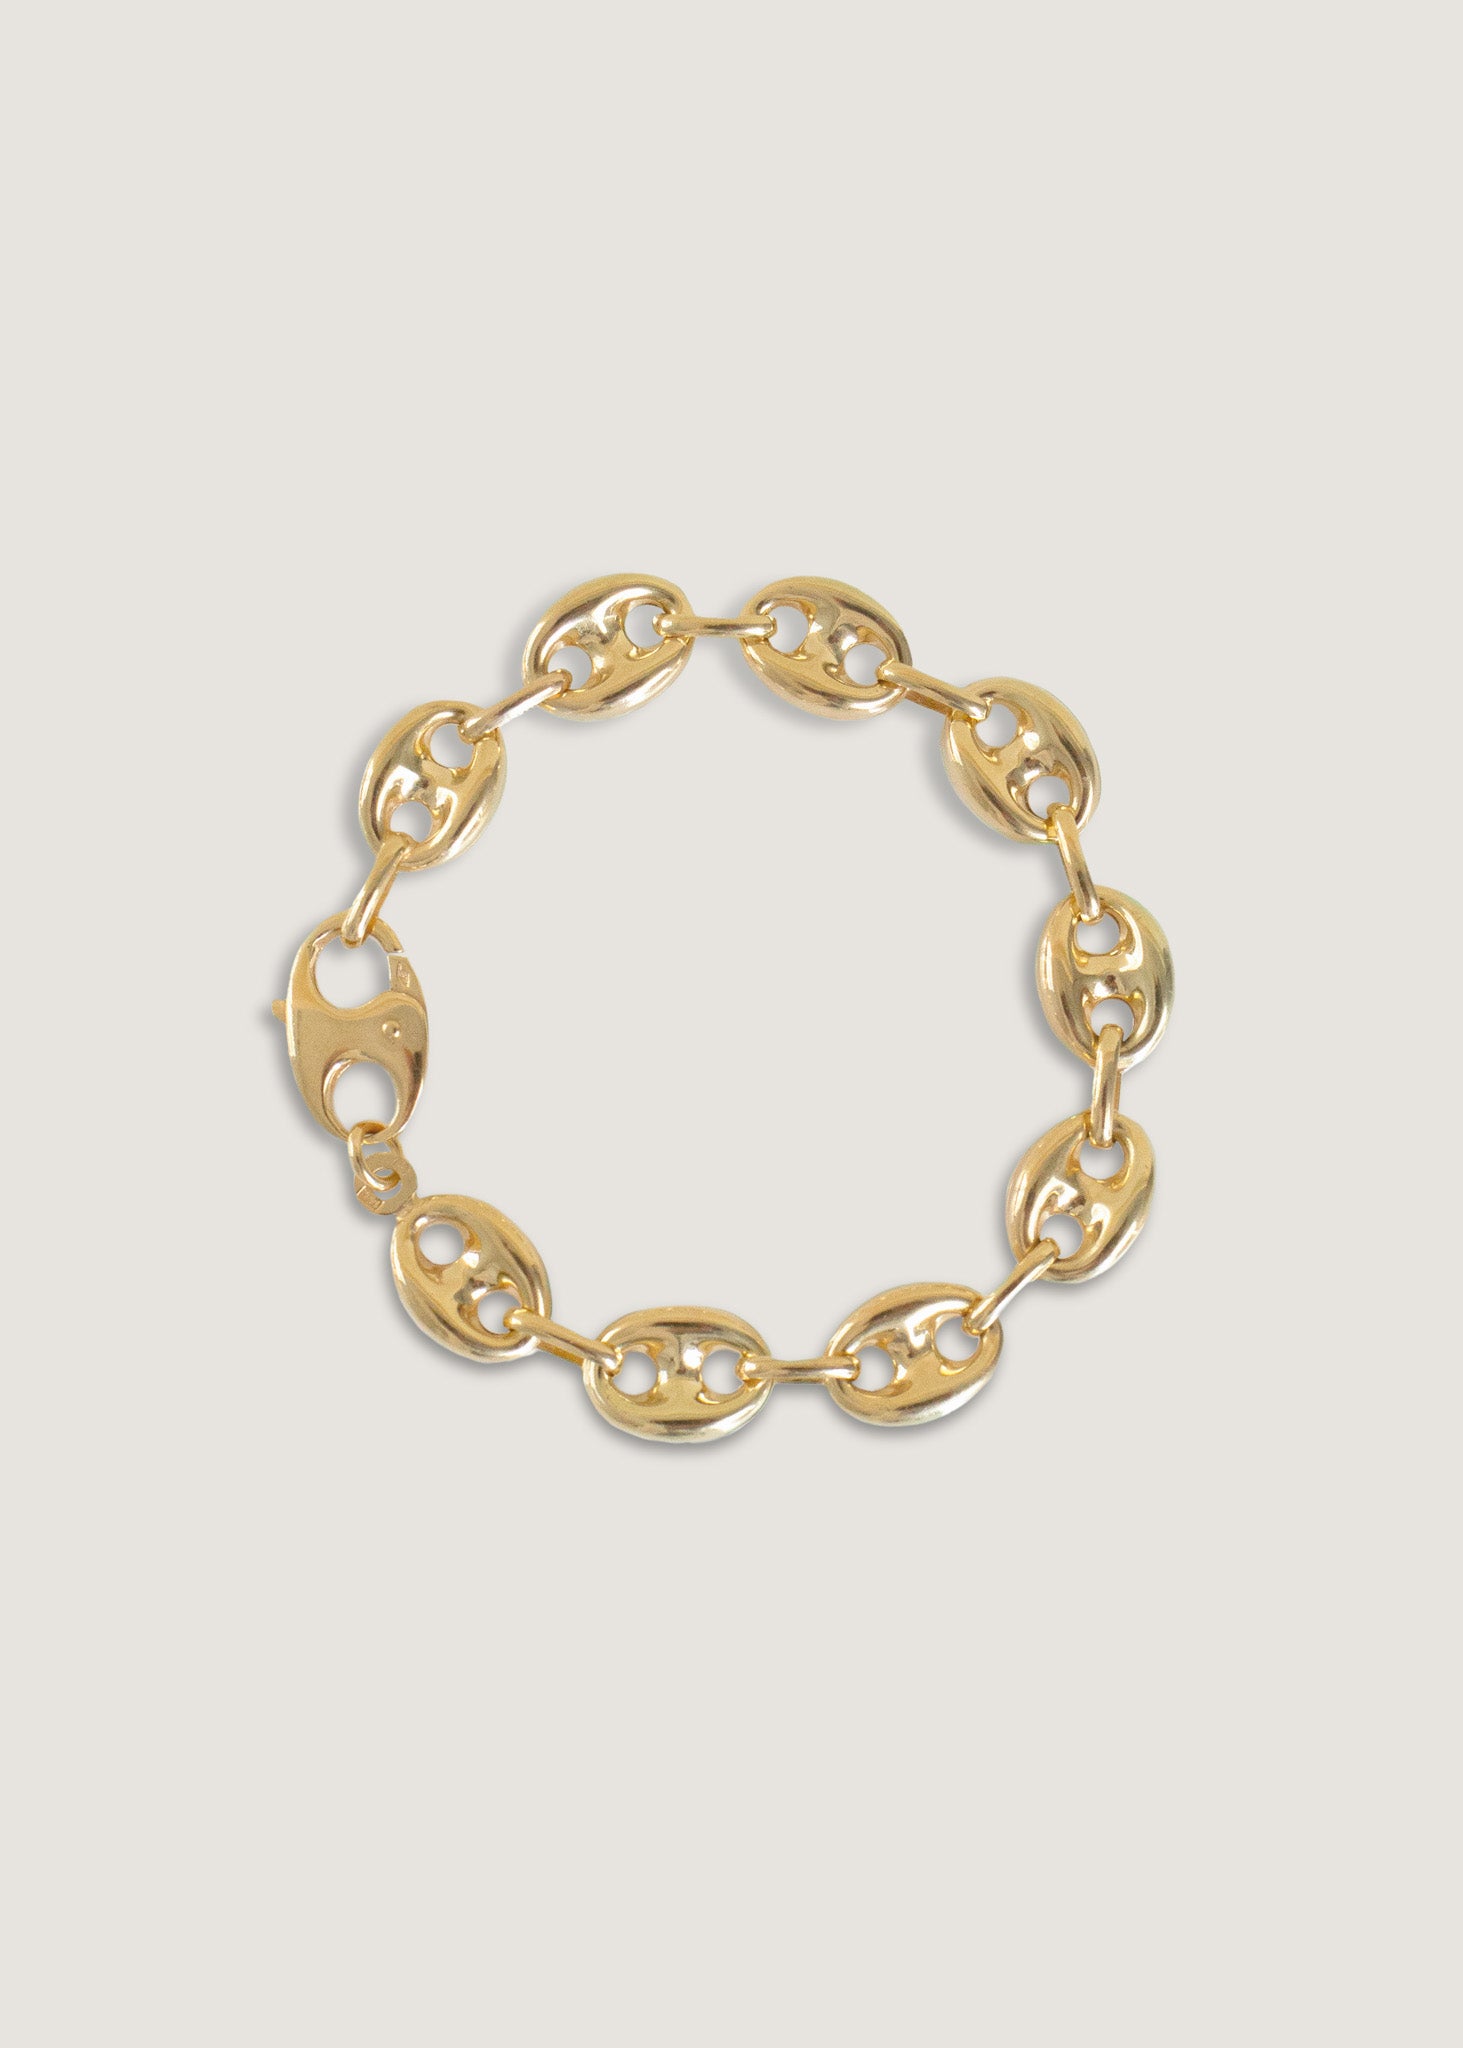 alt="Puffed Mariner Chain Bracelet 14k YG"